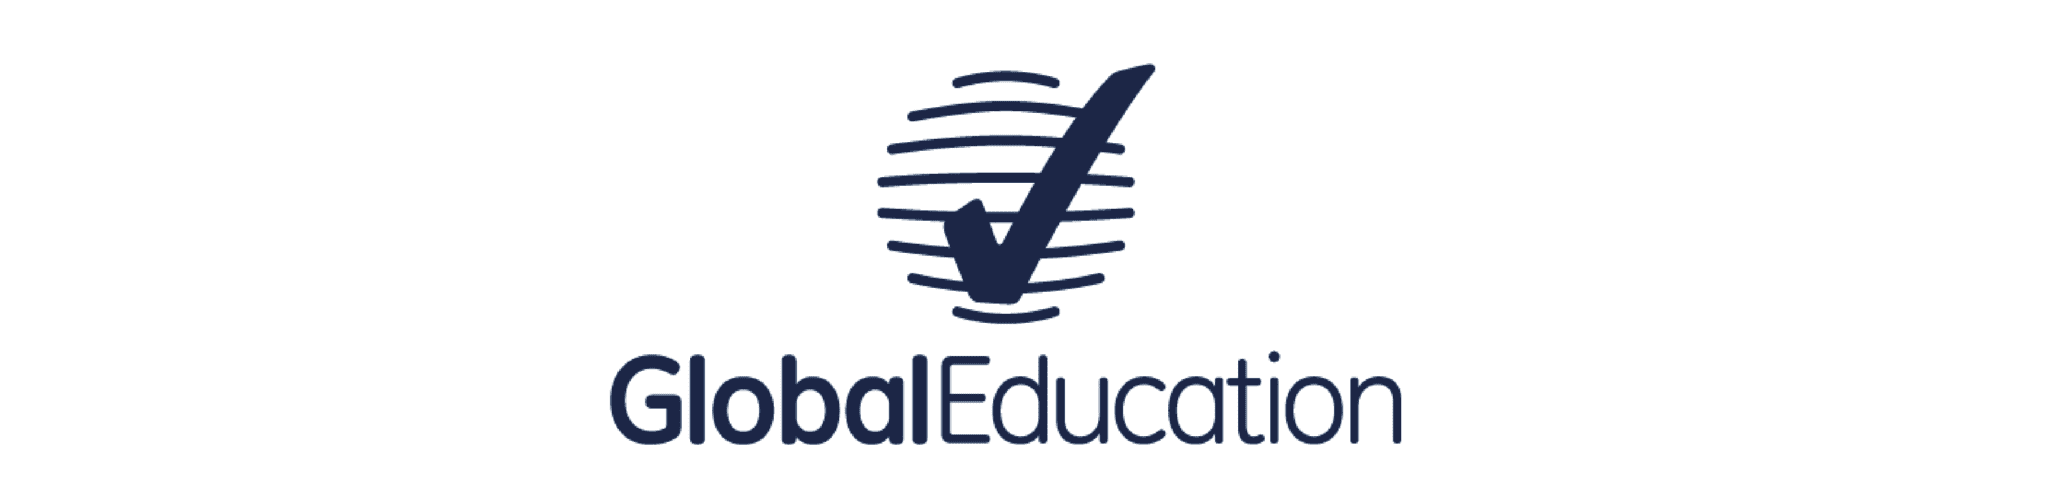 Globaleducation_logos pagina web_Mesa de trabajo 1